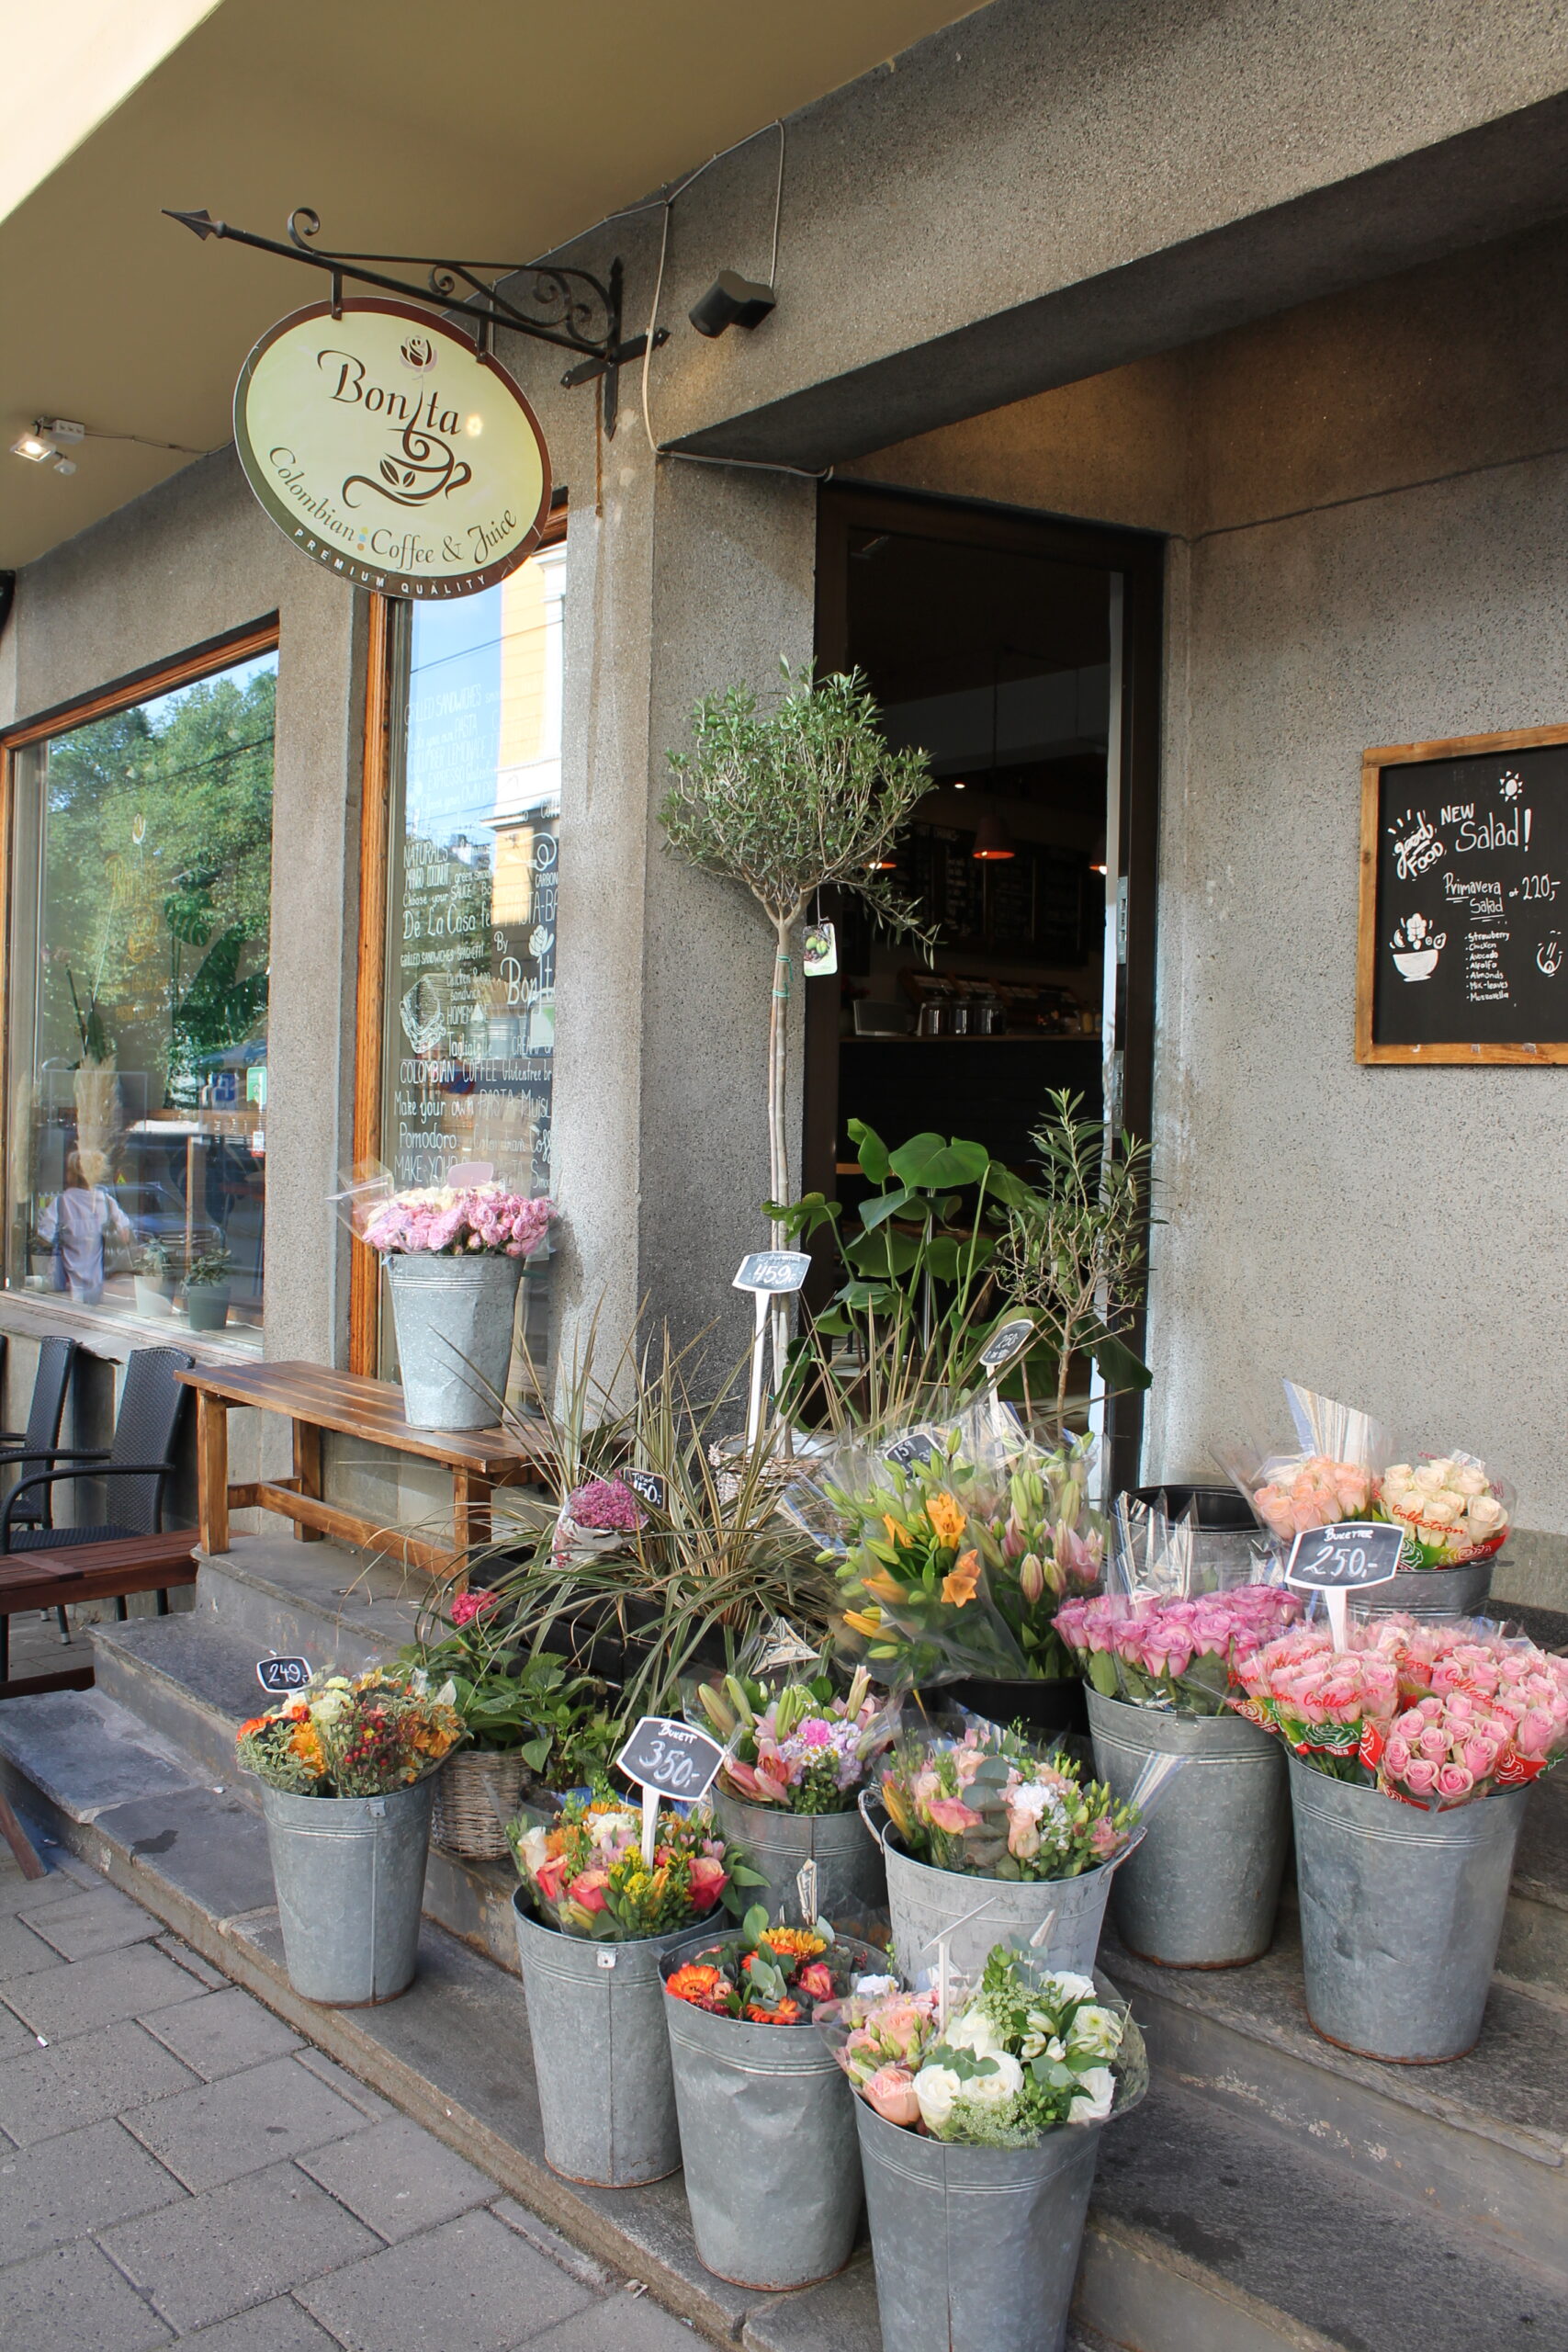 Bonita cafe og blomster i Oslo